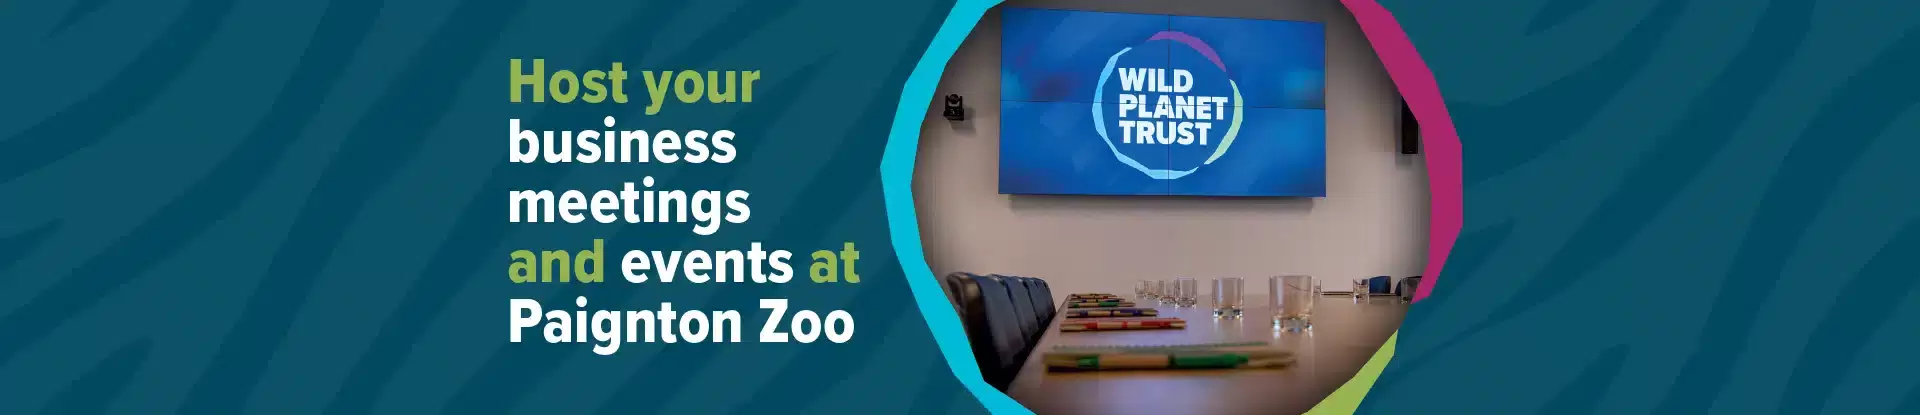 paignton zoo corporate web banner 01